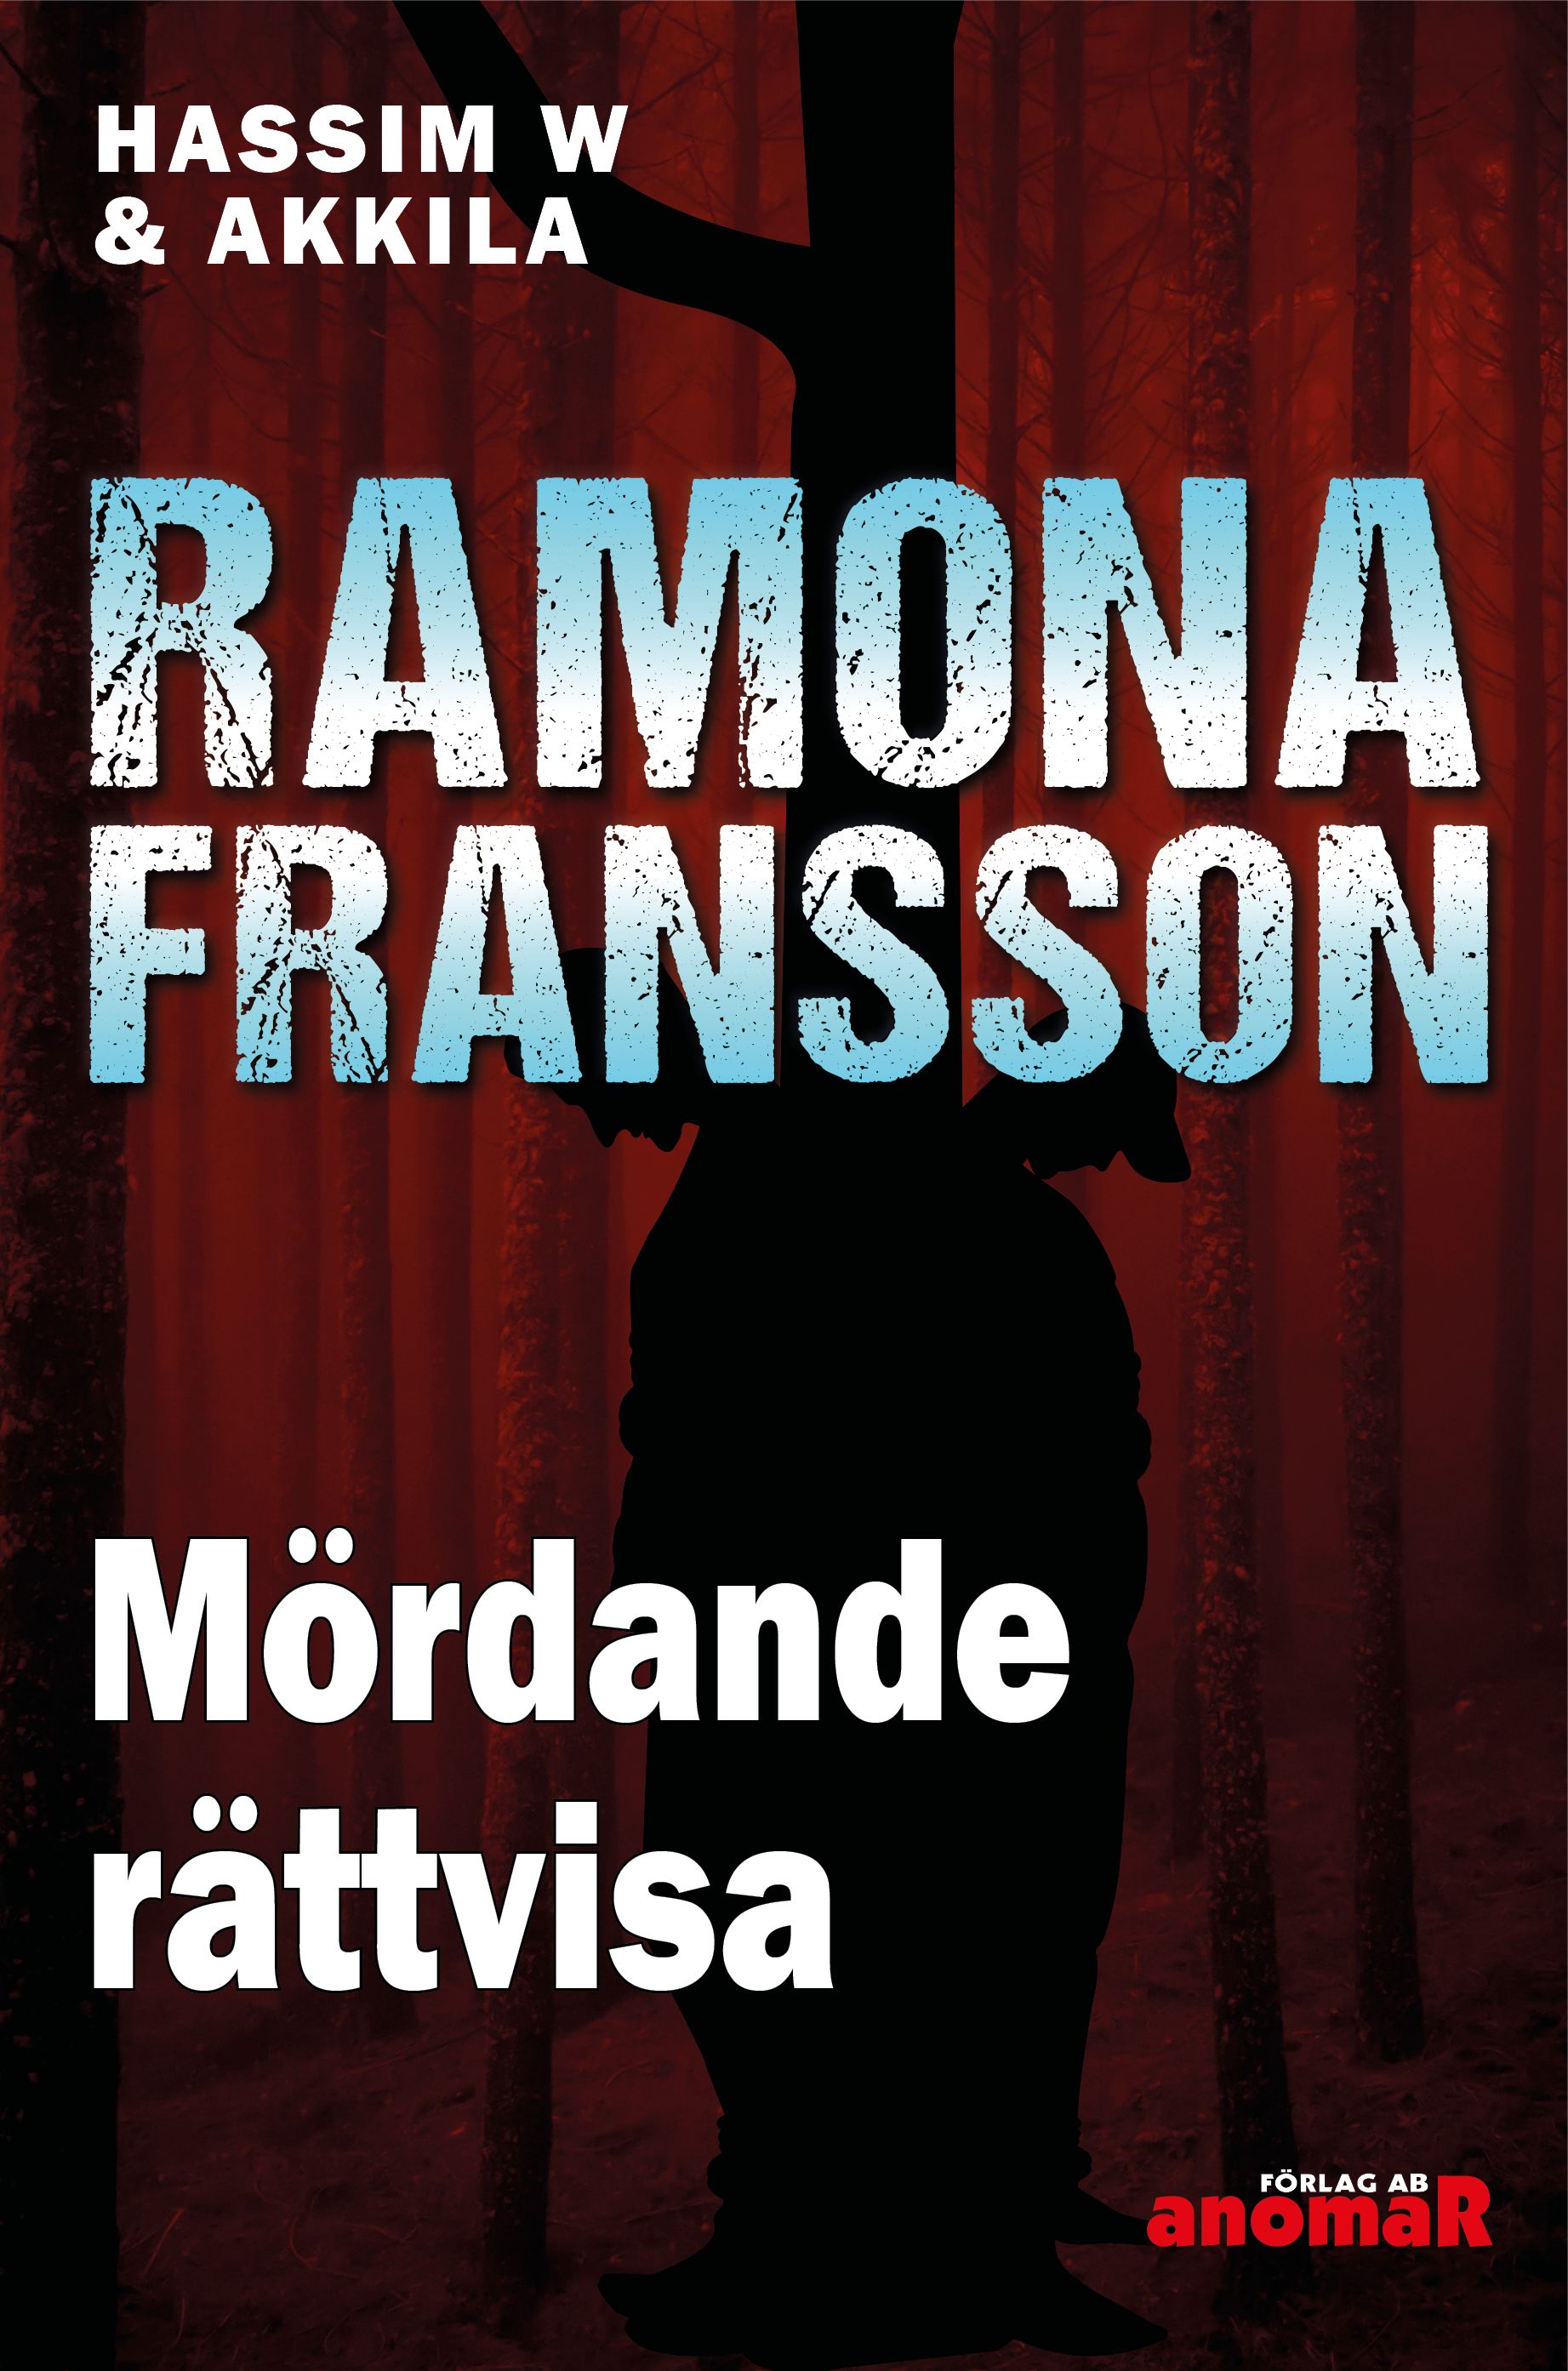 HW & Akkila, Mördande rättvisa, eBook by Ramona Fransson